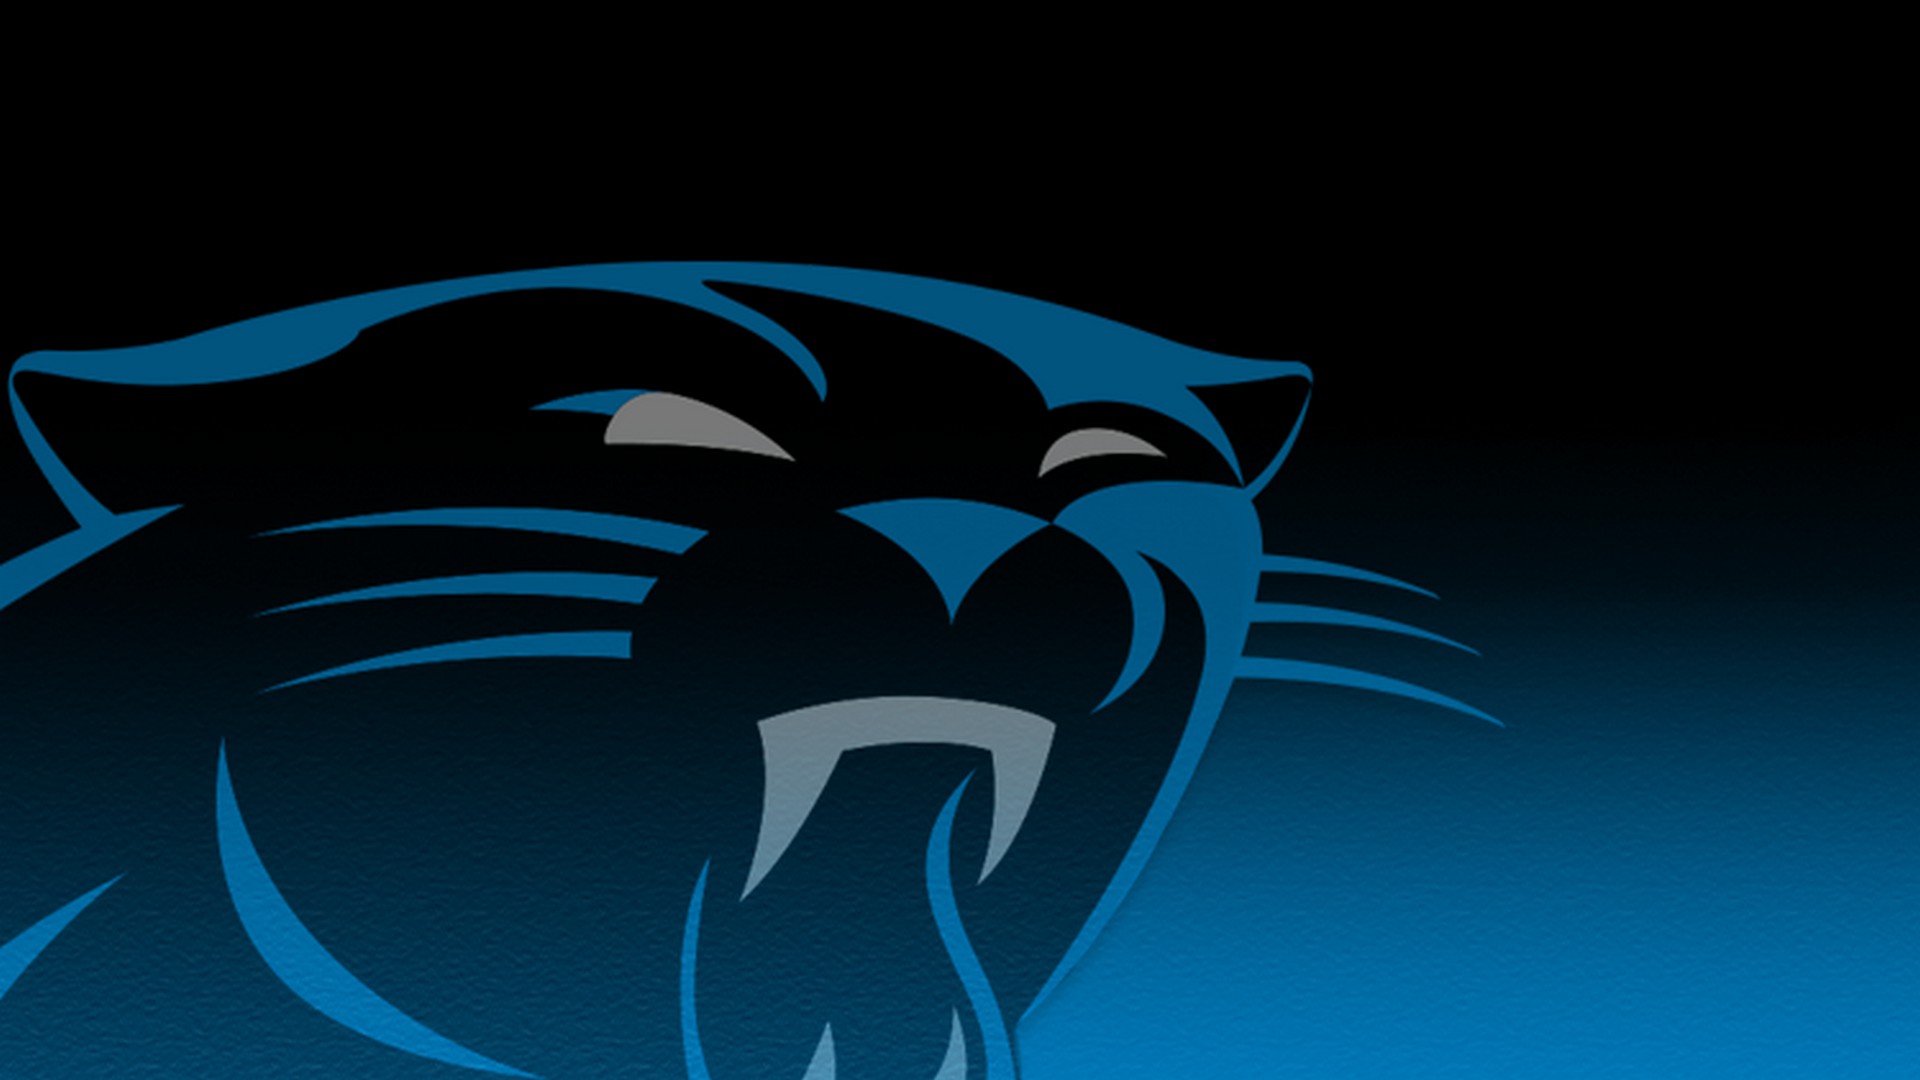 Carolina Panthers Wallpaper For Mac Backgrounds 1920x1080